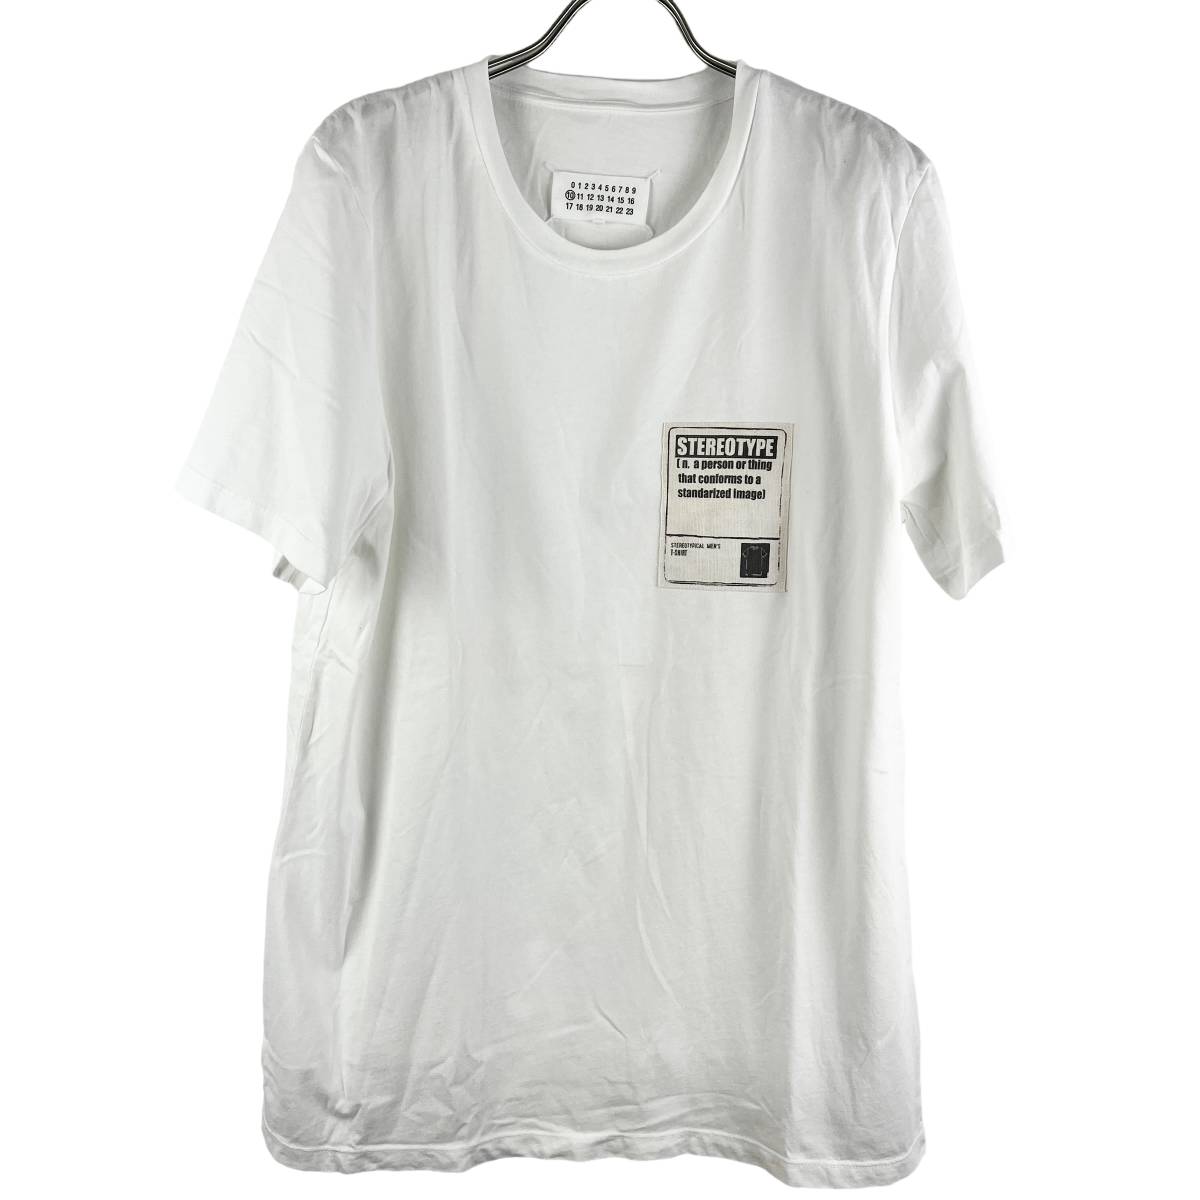 Maison Margiela (メゾン マルジェラ) Pocket Plain T Shirt (white